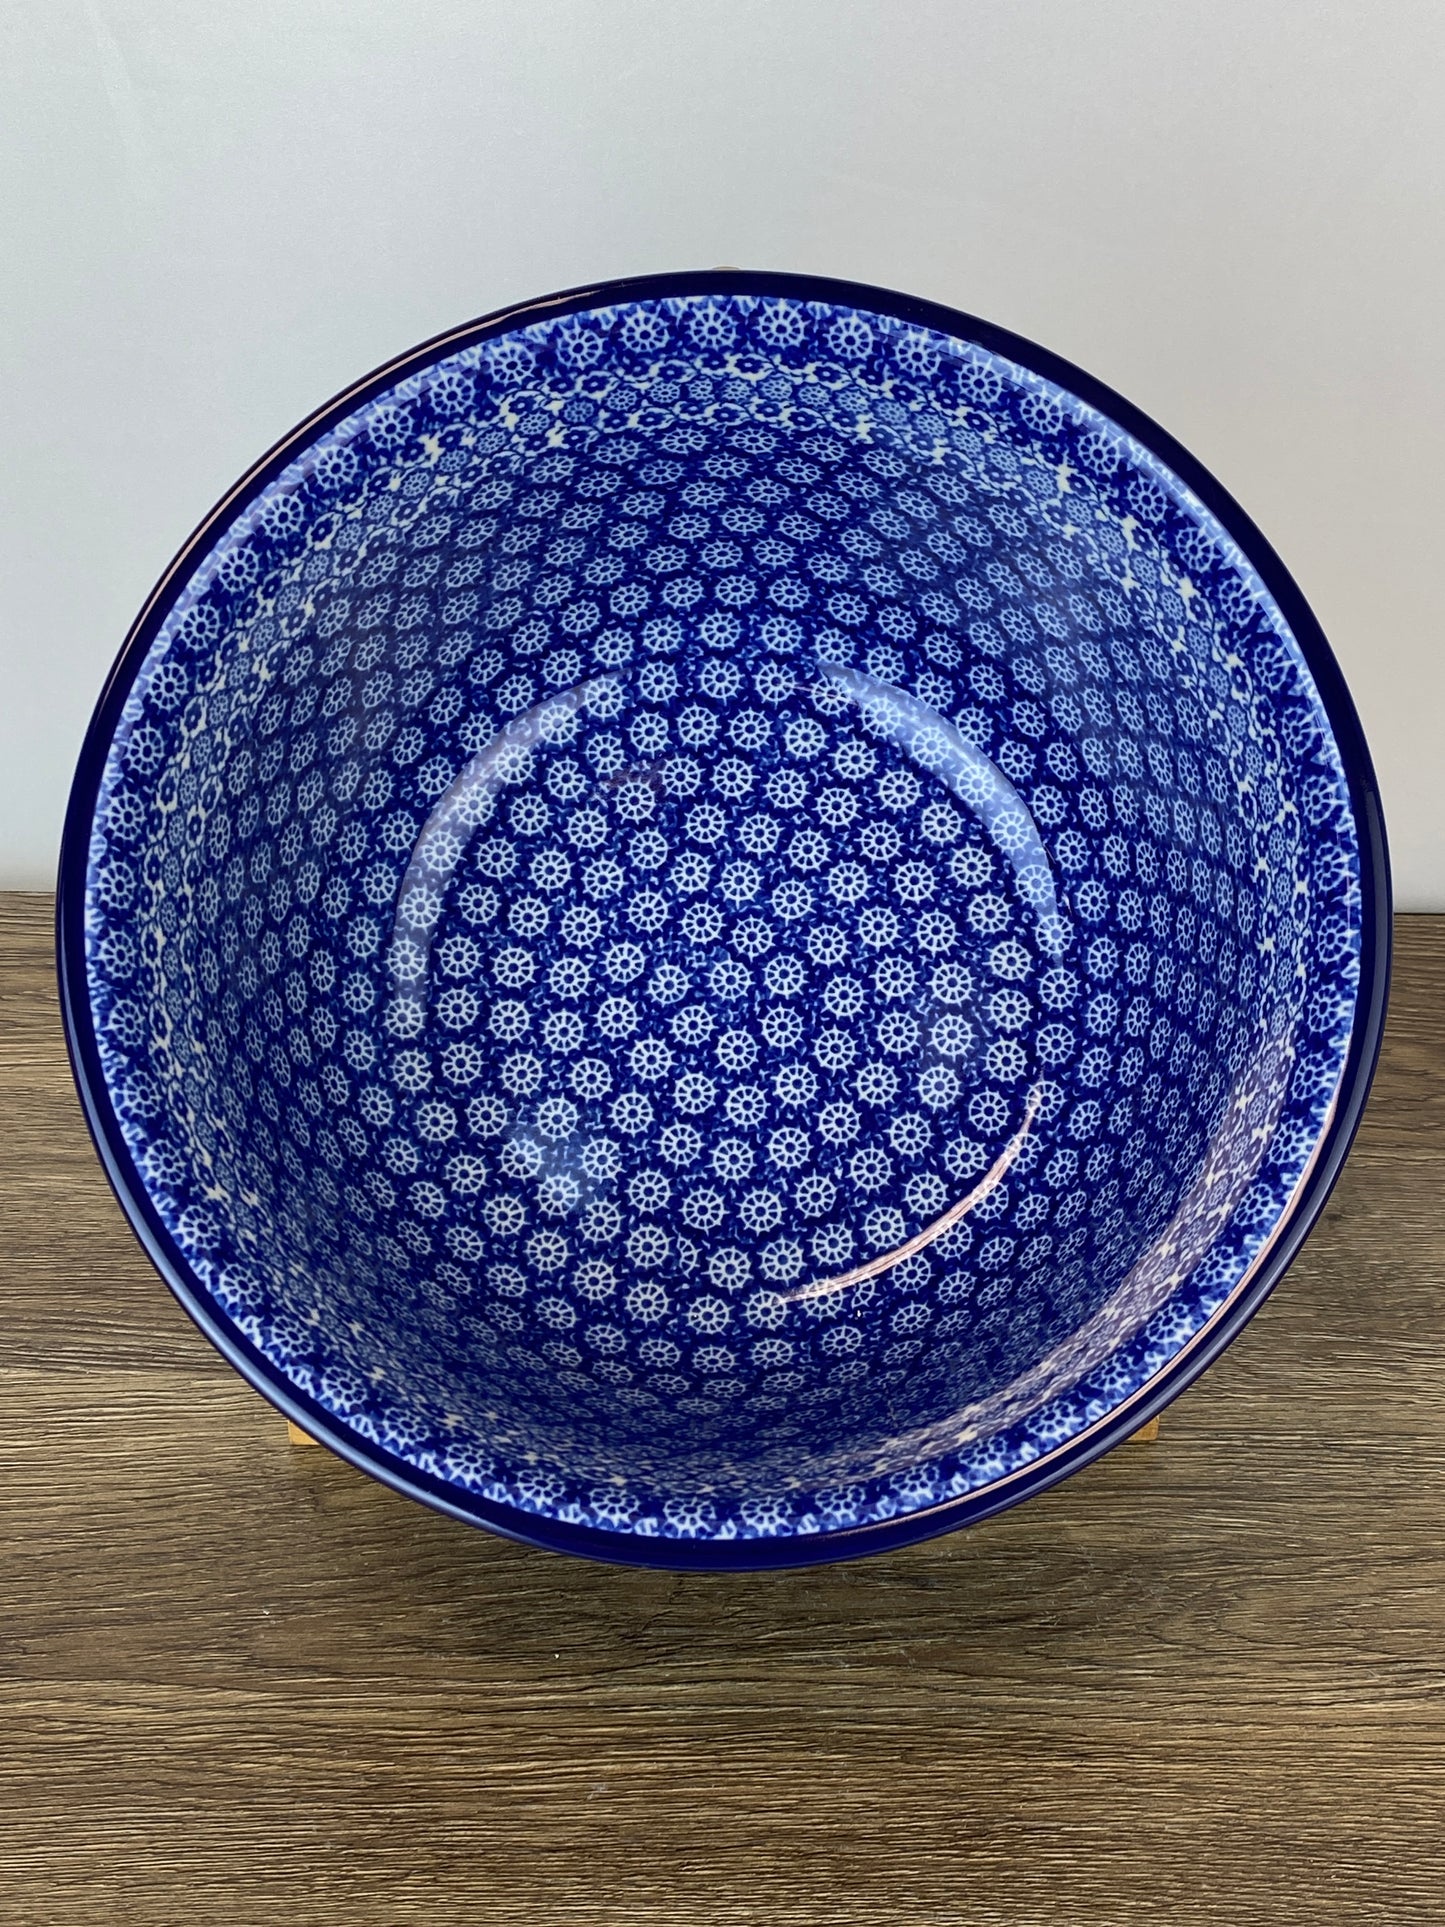 Large Mixing Bowl - Shape 113 - Pattern 2615